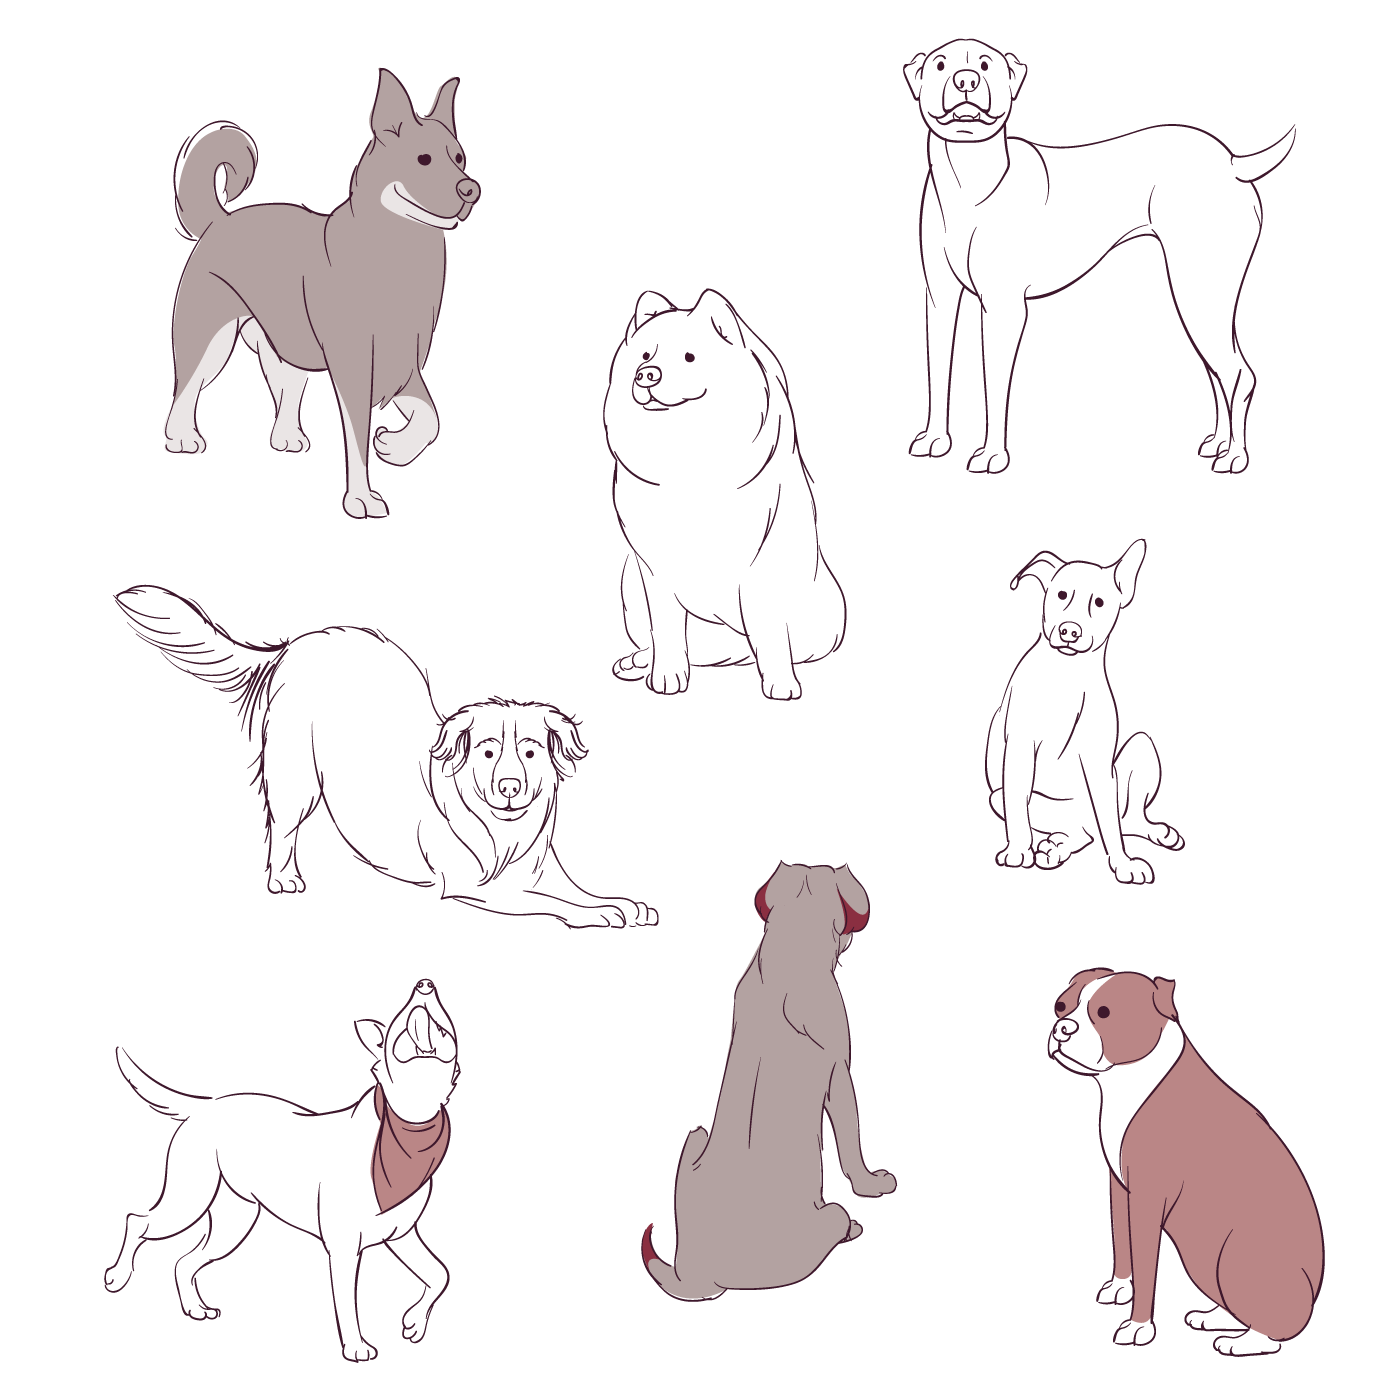 Doggo Sketches. August 2019.